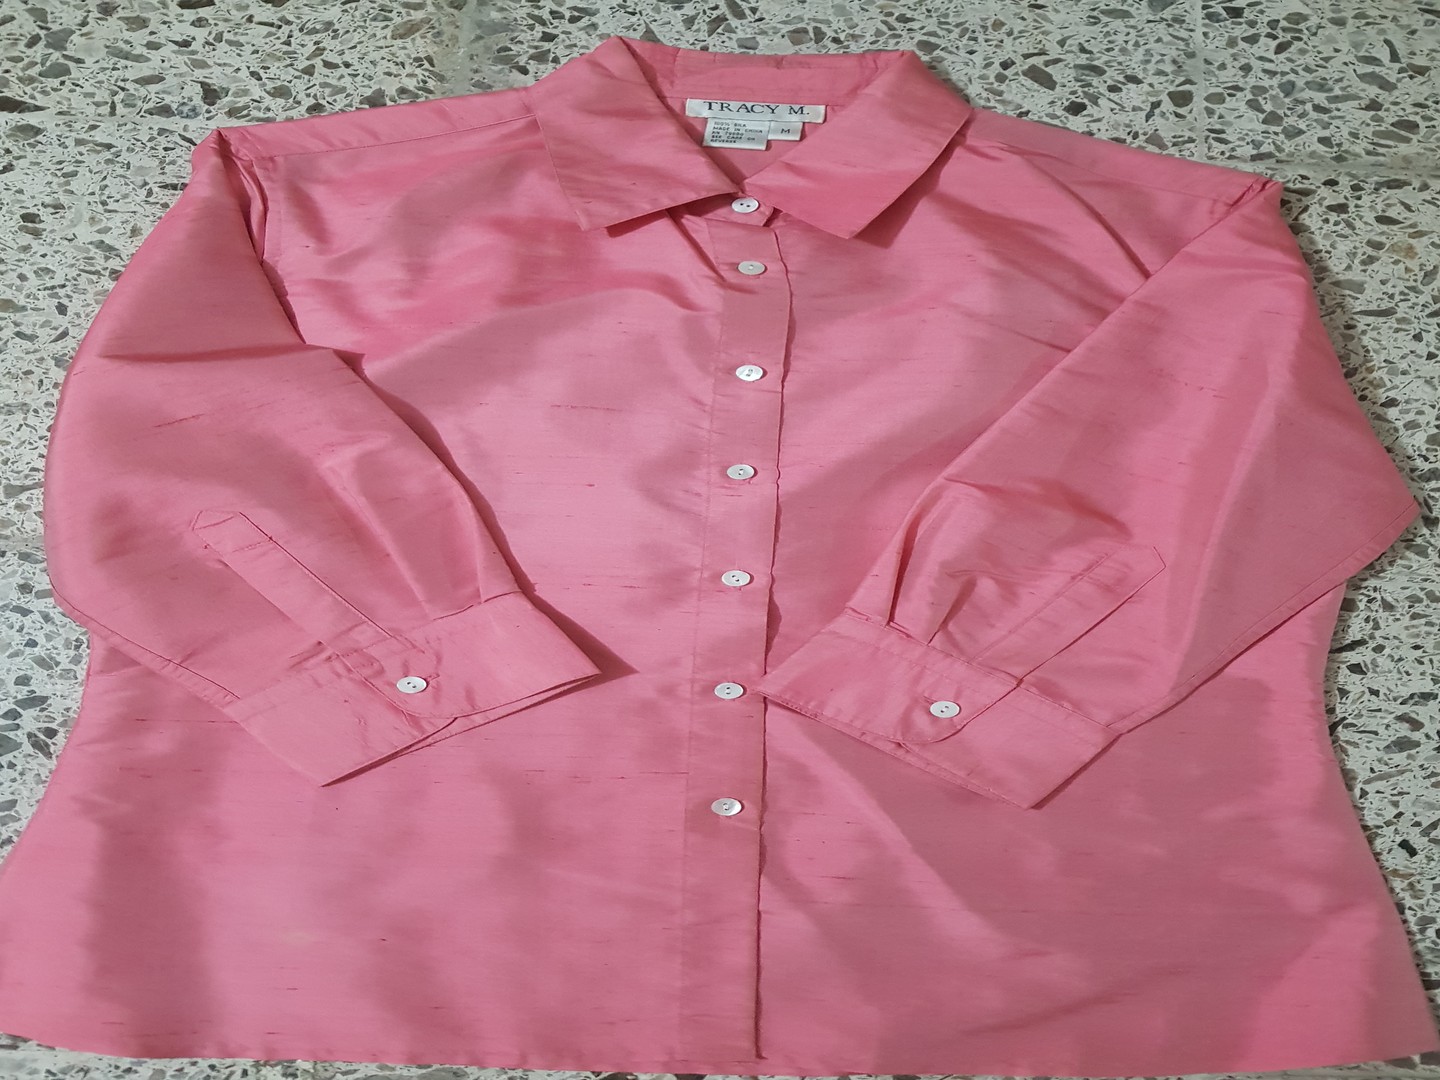 ropa para mujer - Elegante blusa camisera de seda pura, tamaño M, marca Tracy M. 3